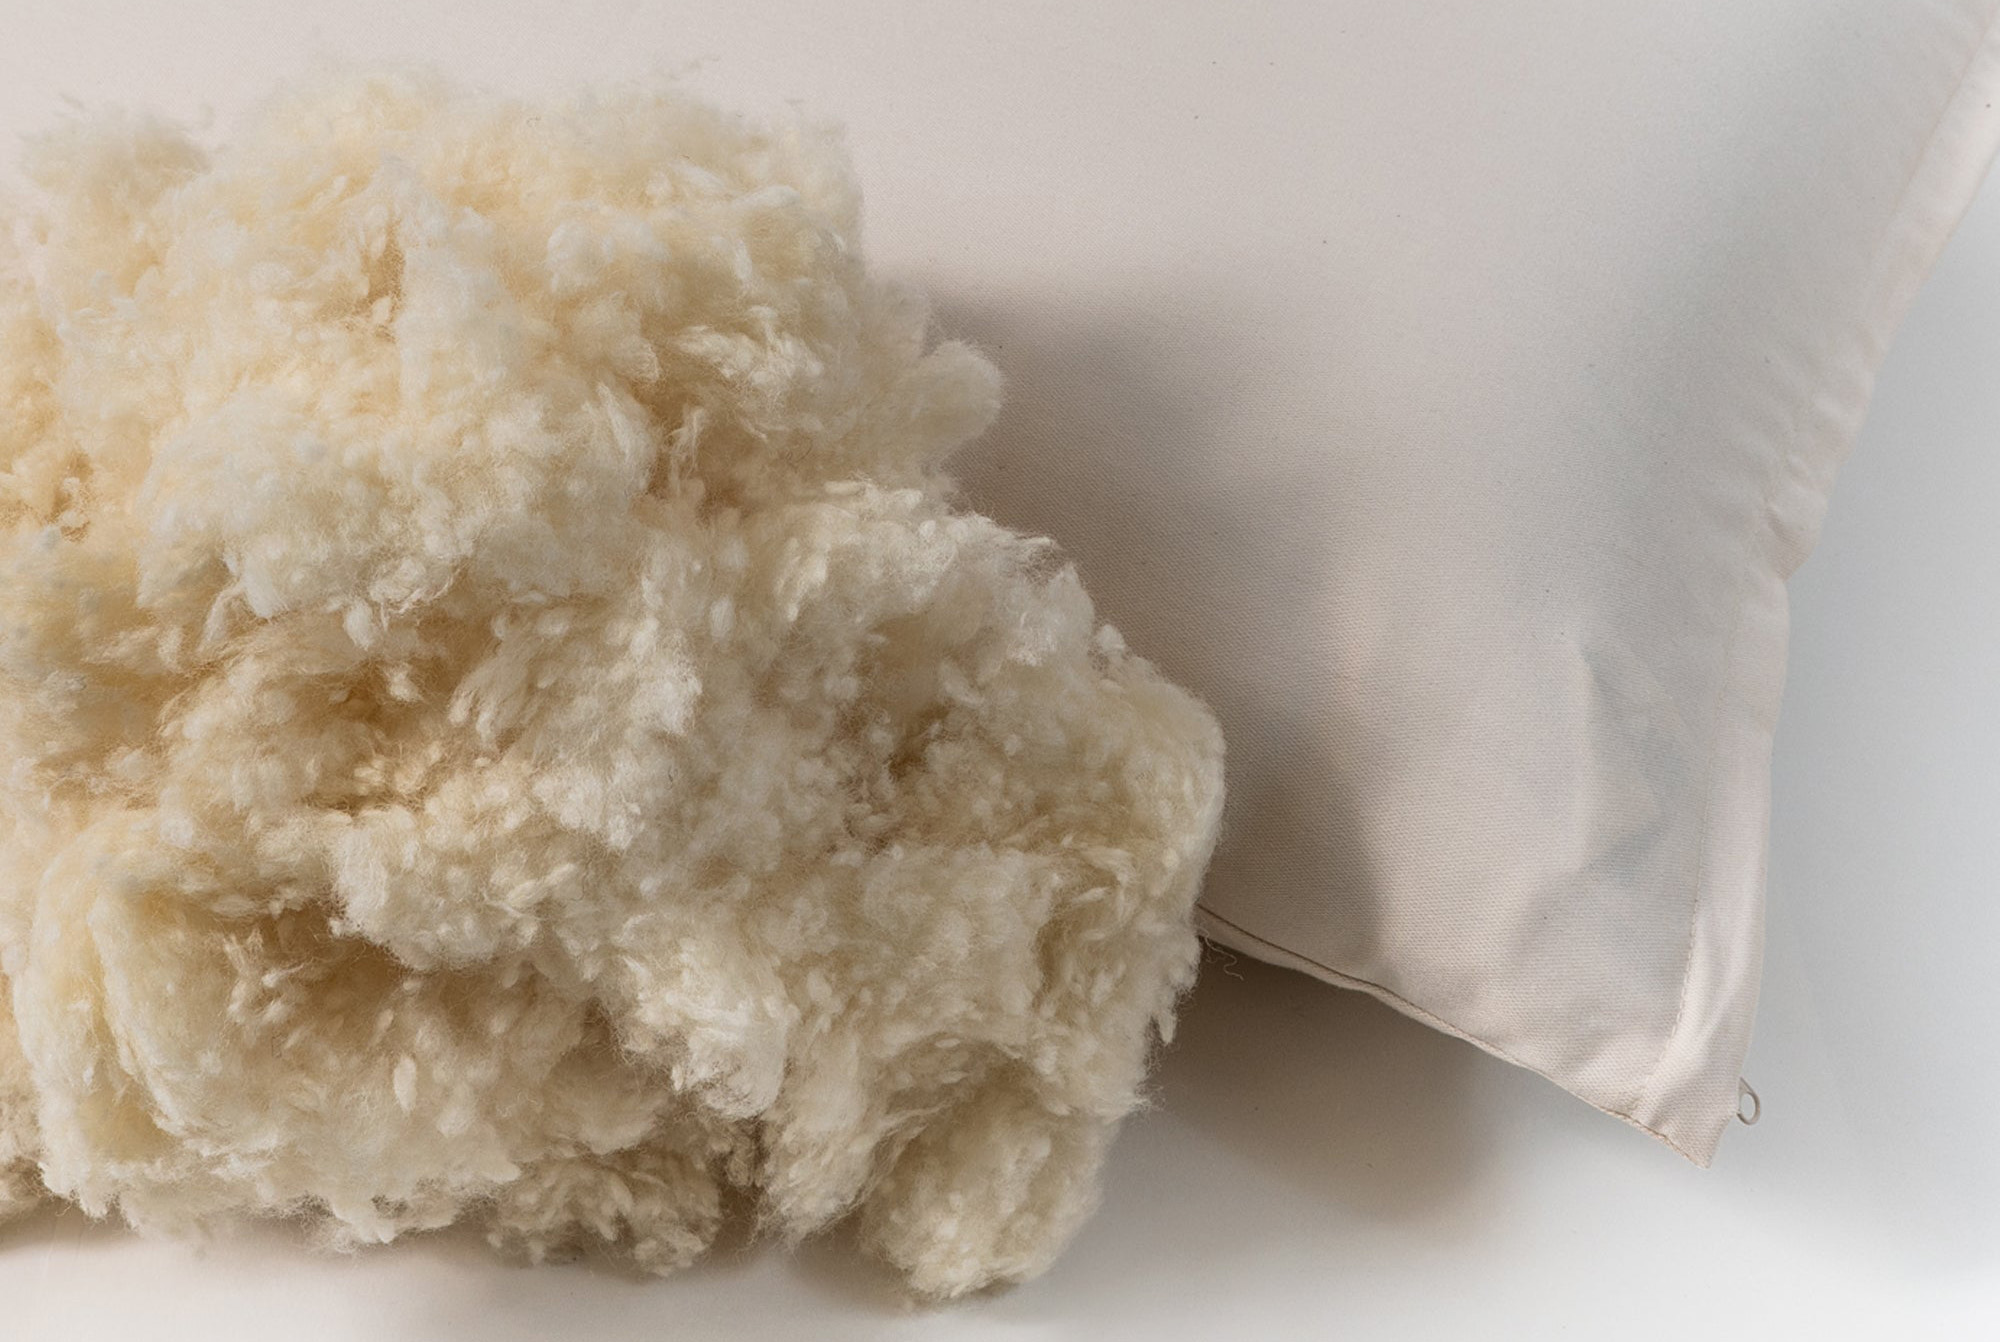 Cotton Pillow — Sachi Organics